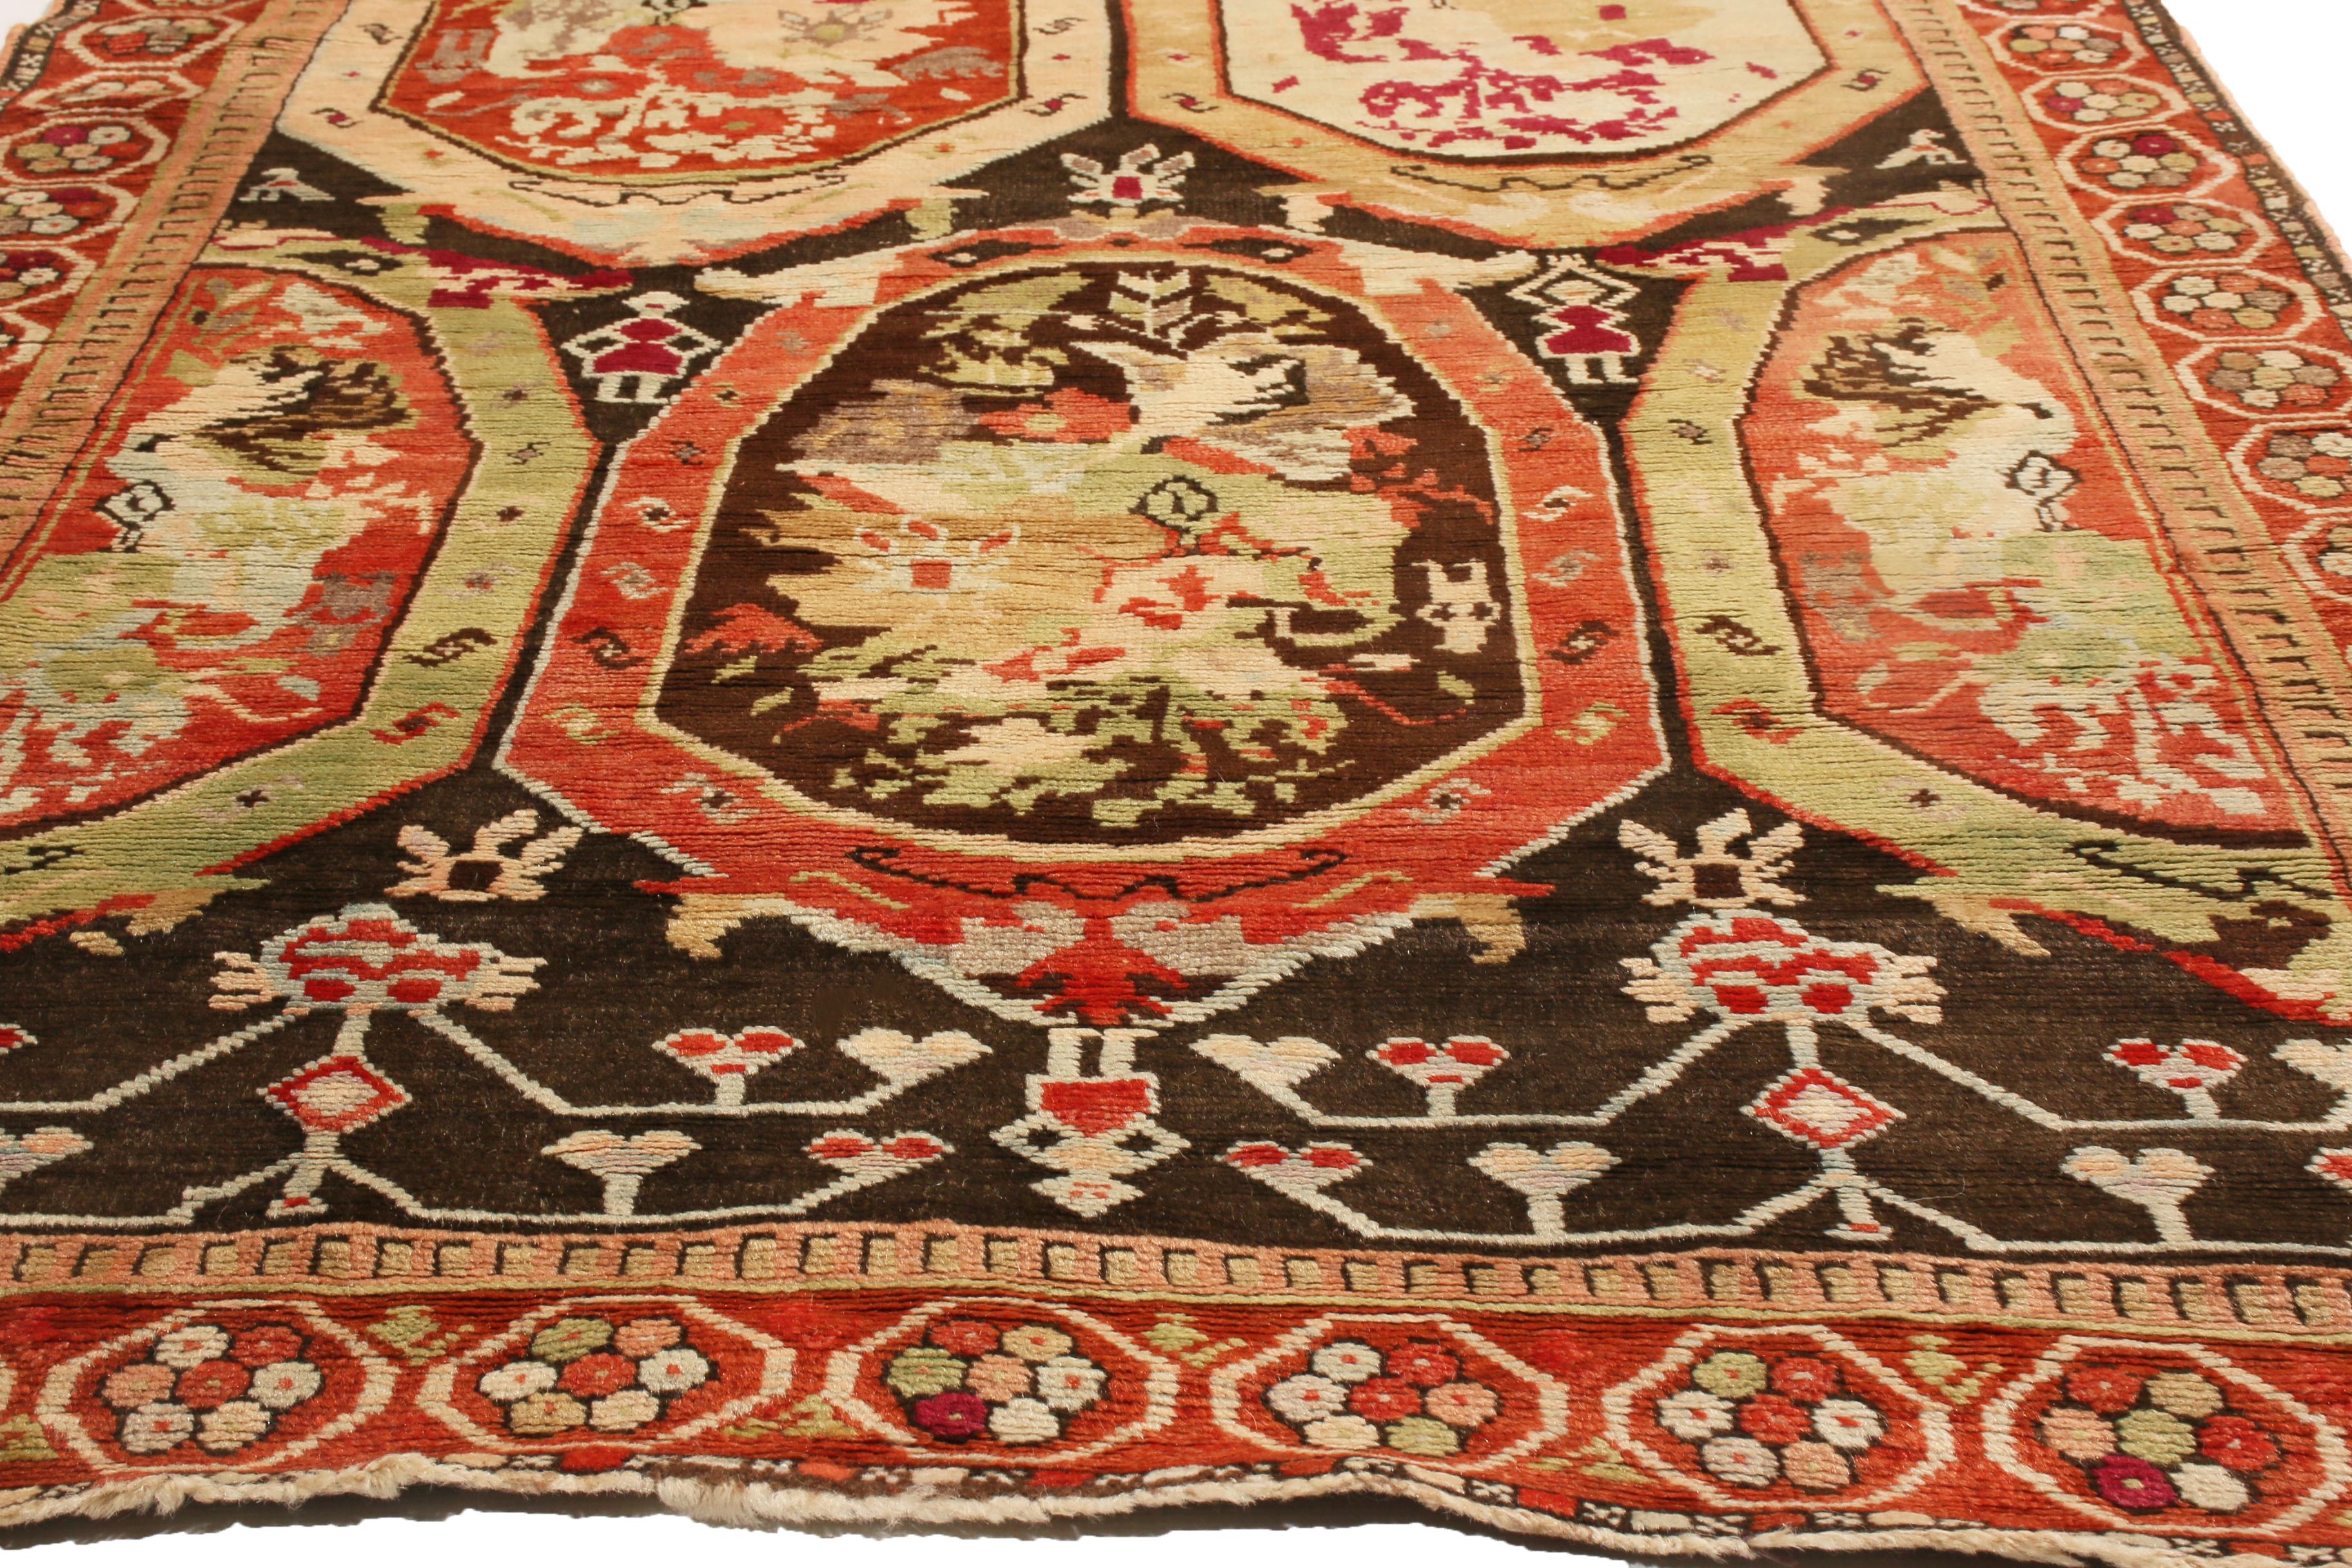 European Antique Karabagh Magenta and Brown Wool Runner